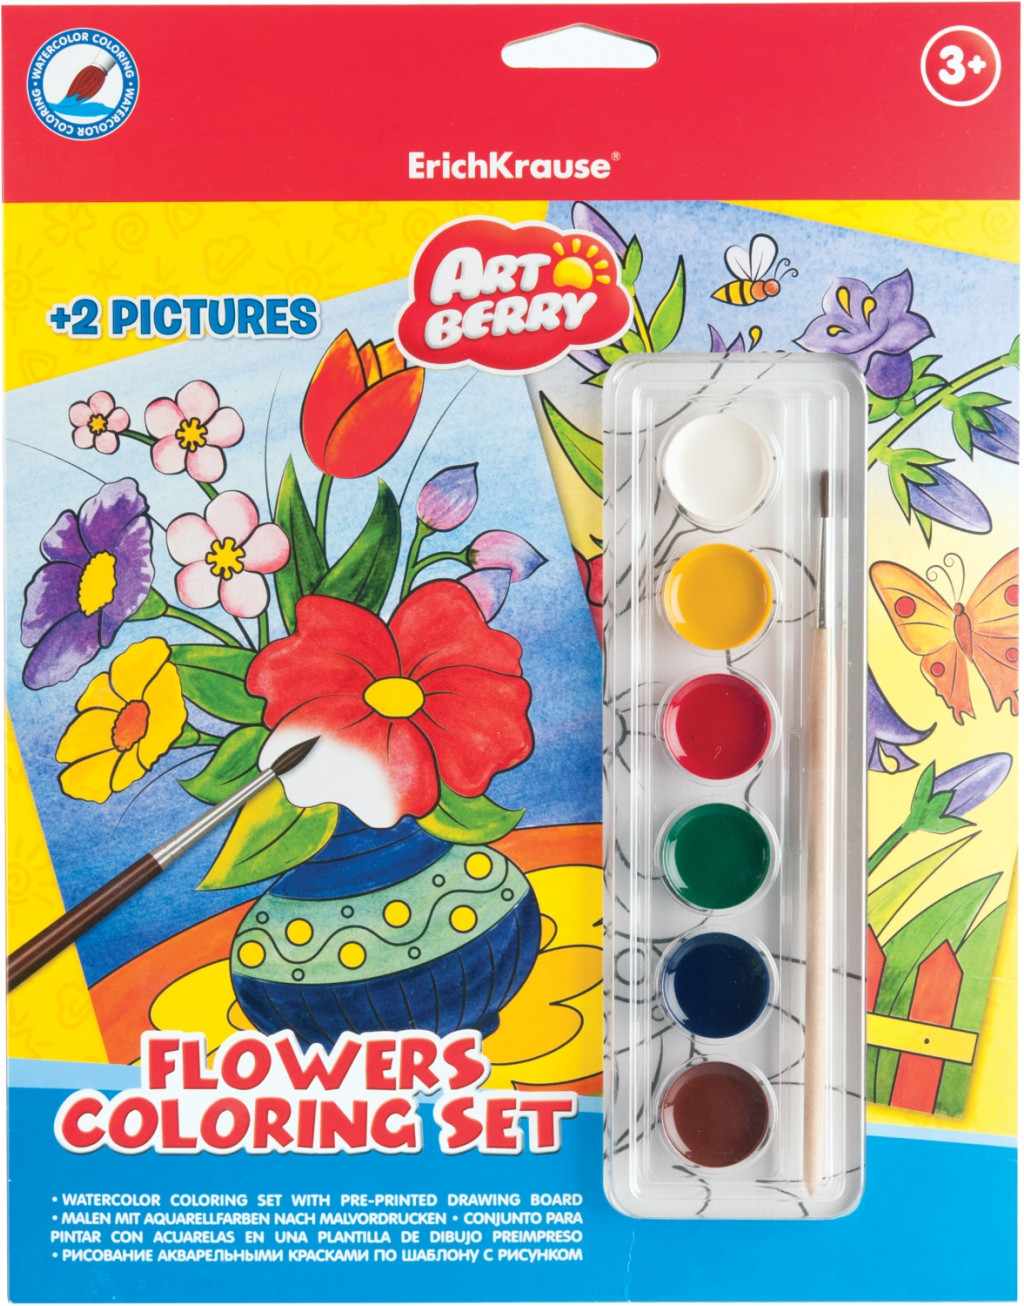 36959   6+2  Flowers Coloring Set Artberry 57,65.jpg